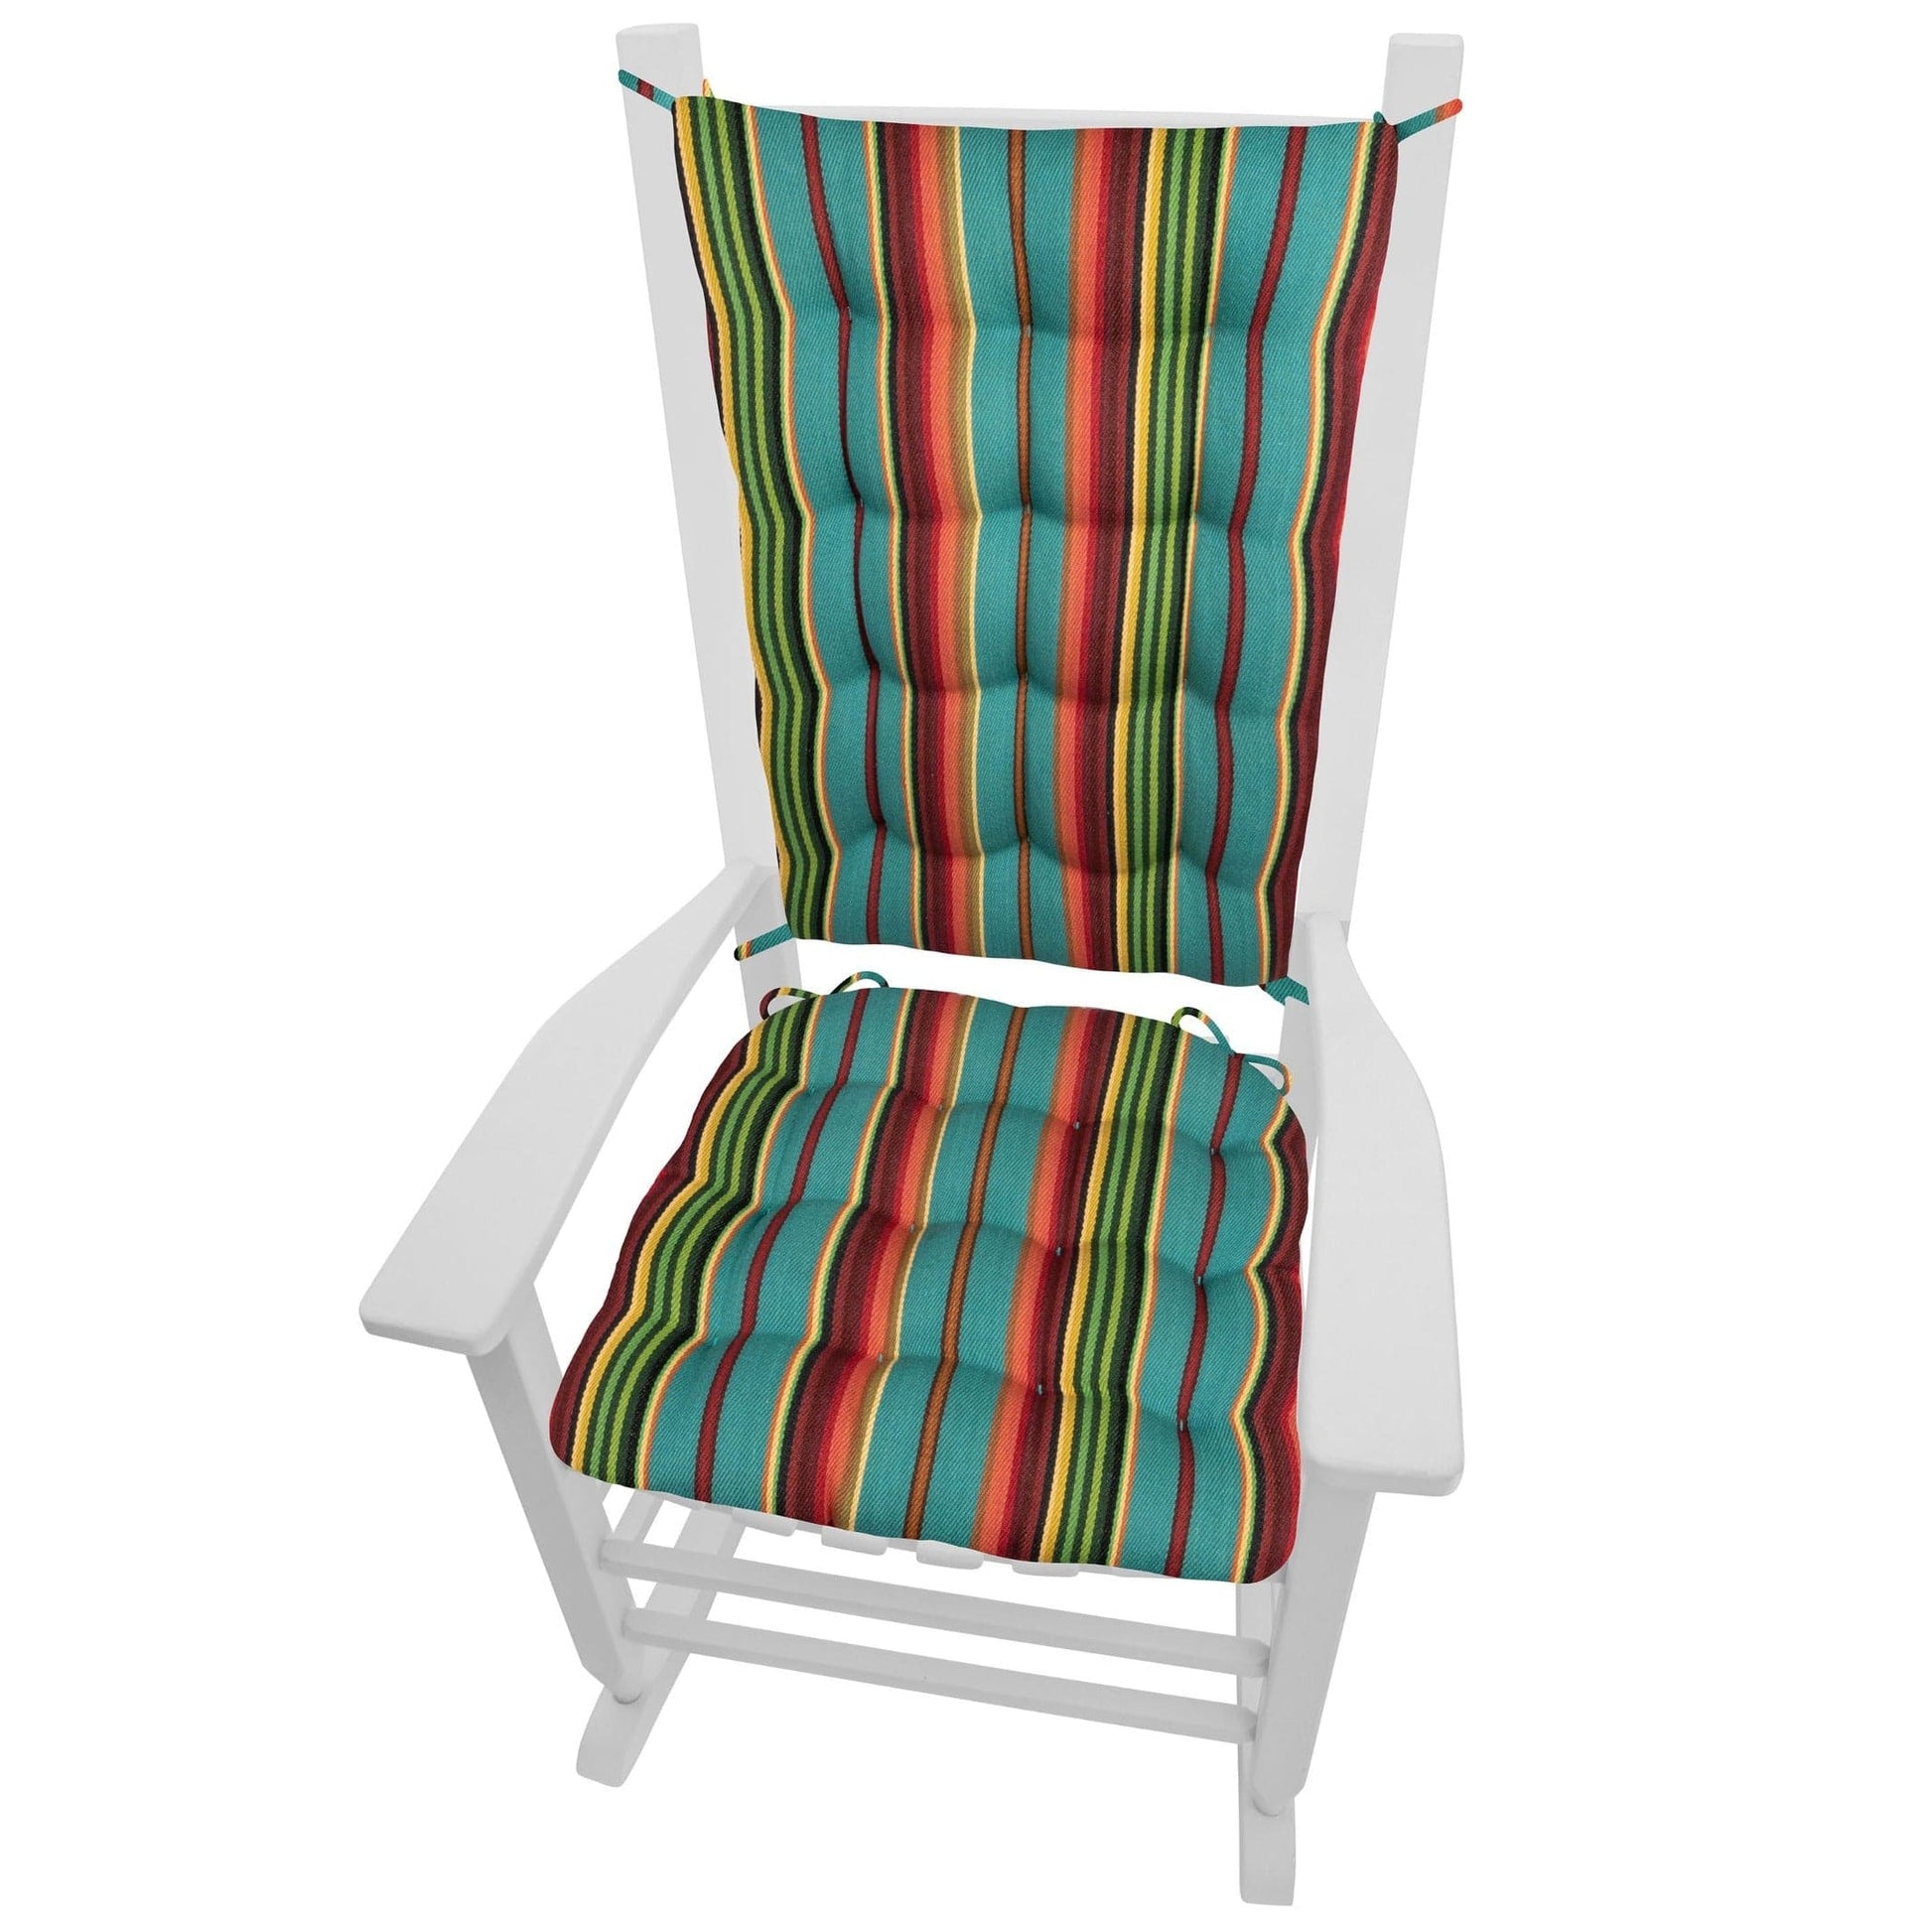 Santa Fe Serape Stripe Rocking Chair Cushions - Barnett Home Decor - Teal, Green, Red, Yellow, & Copper